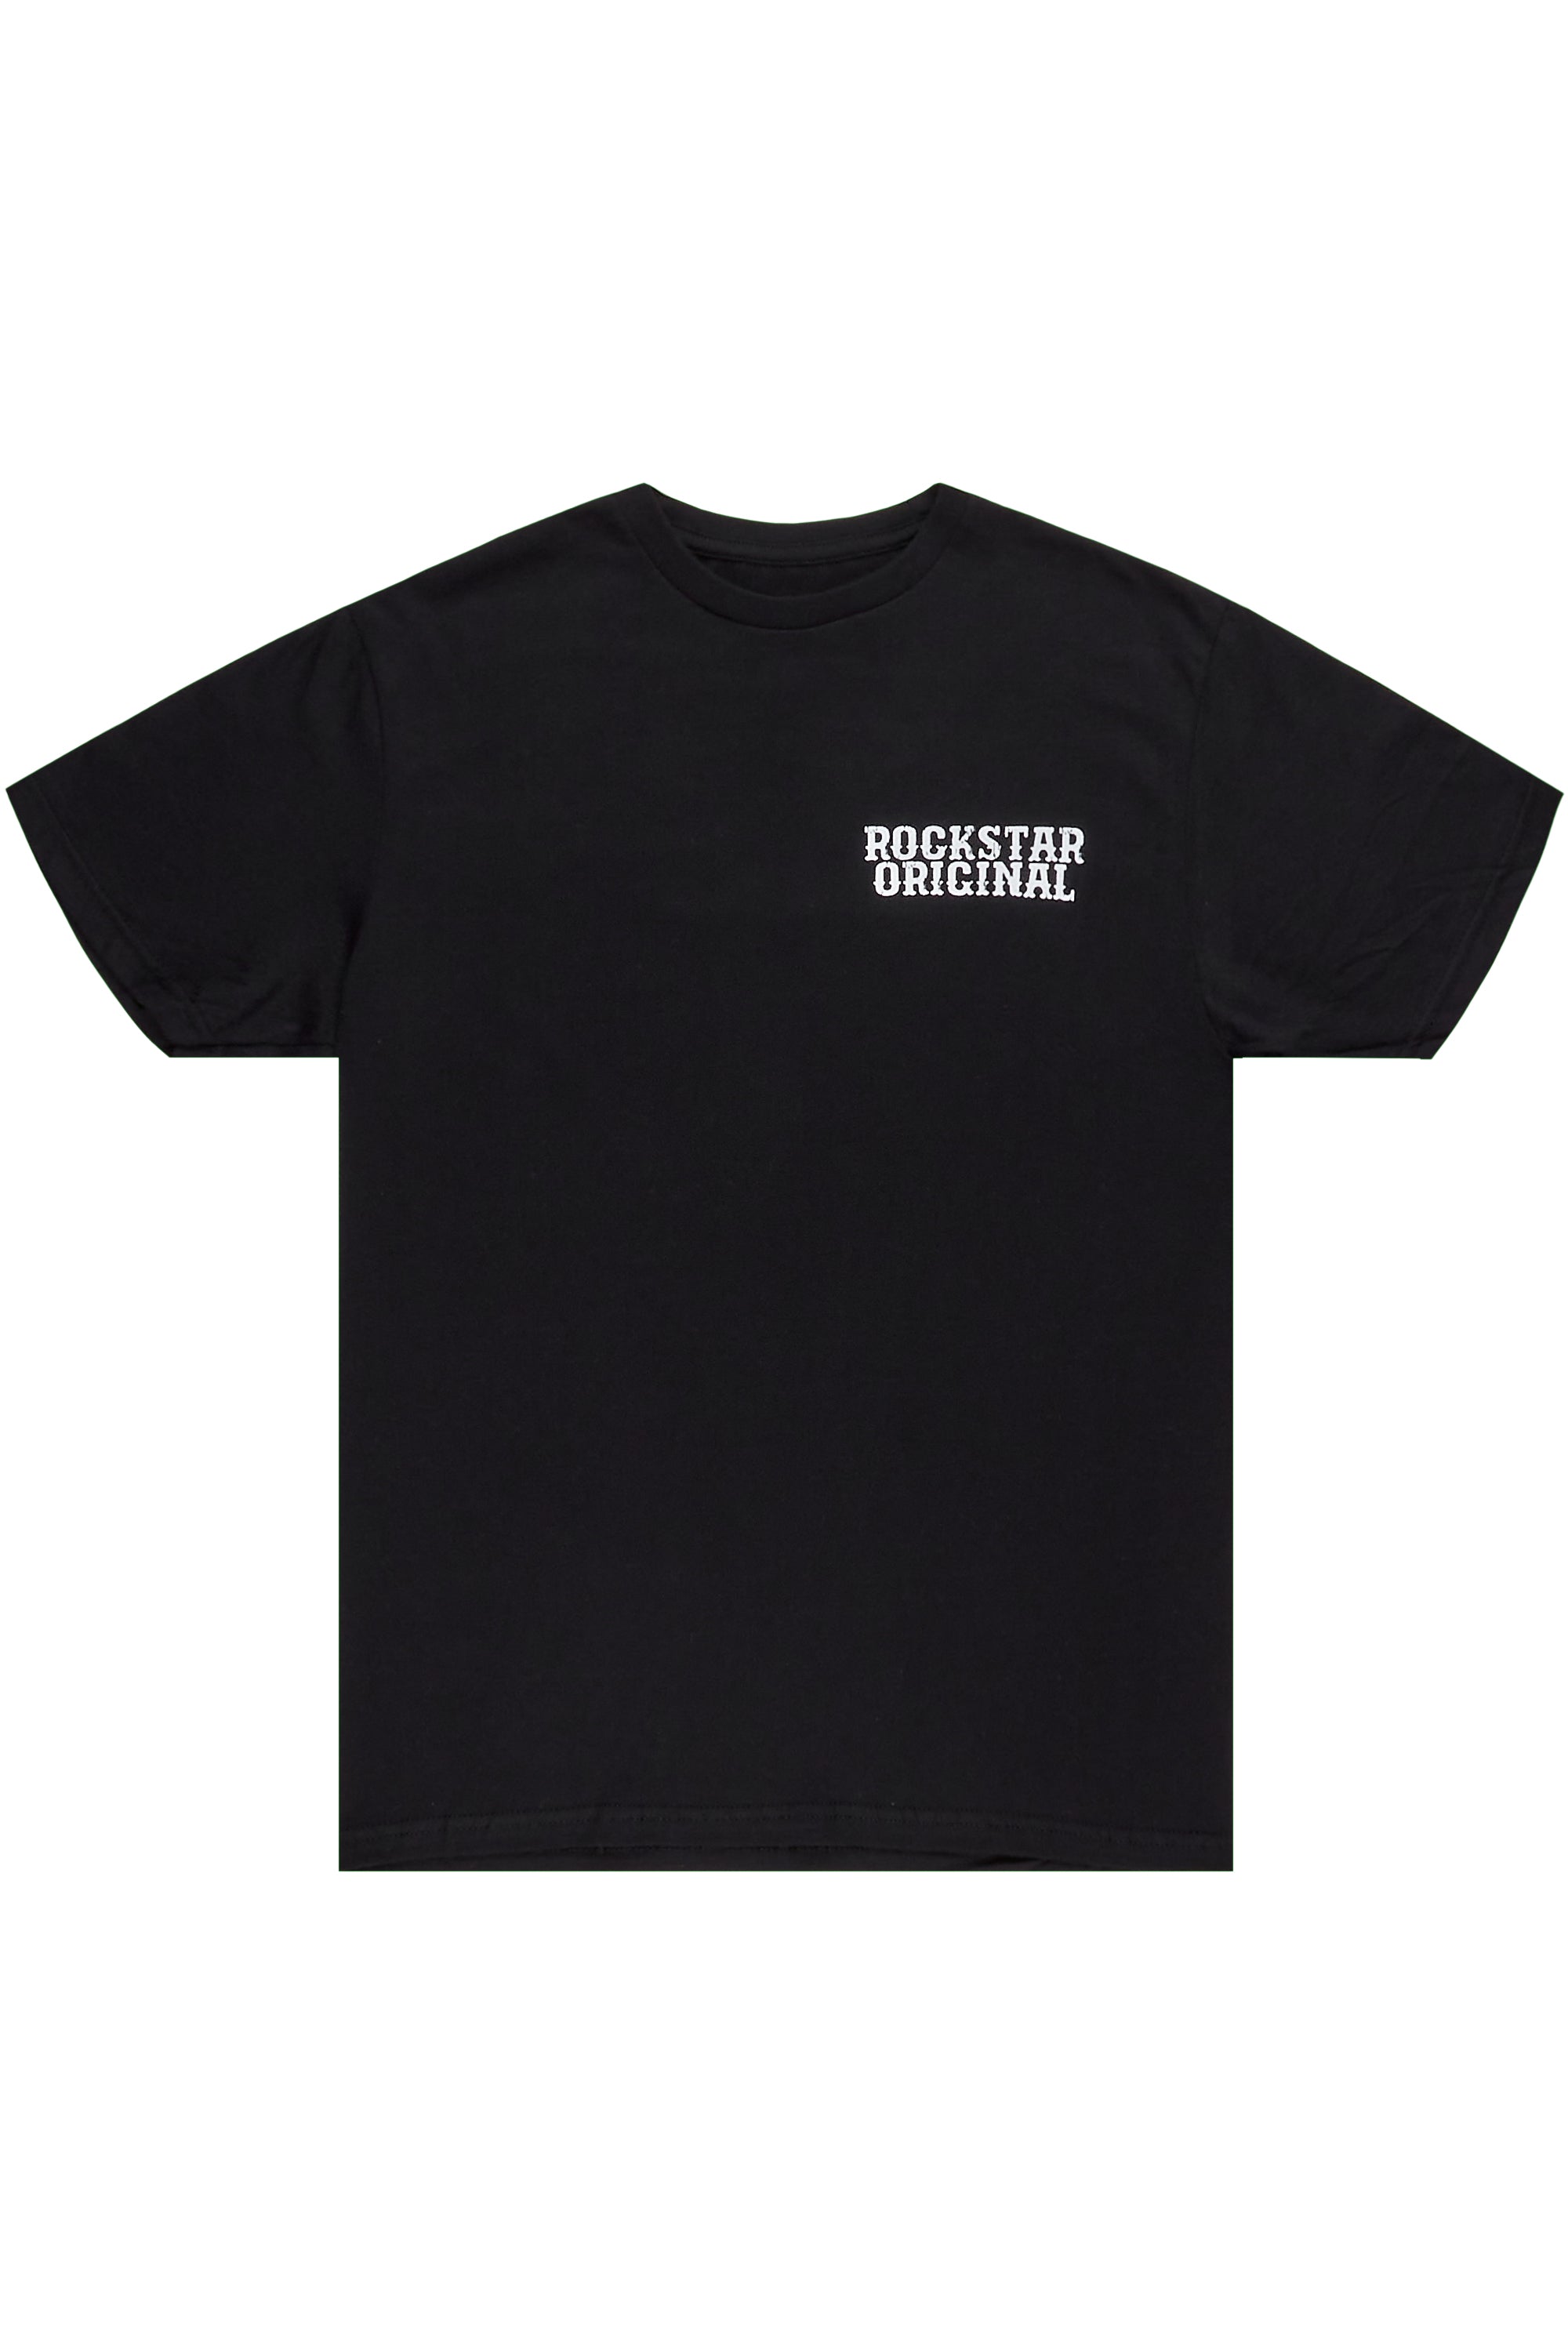 Posse Black Graphic T-Shirt